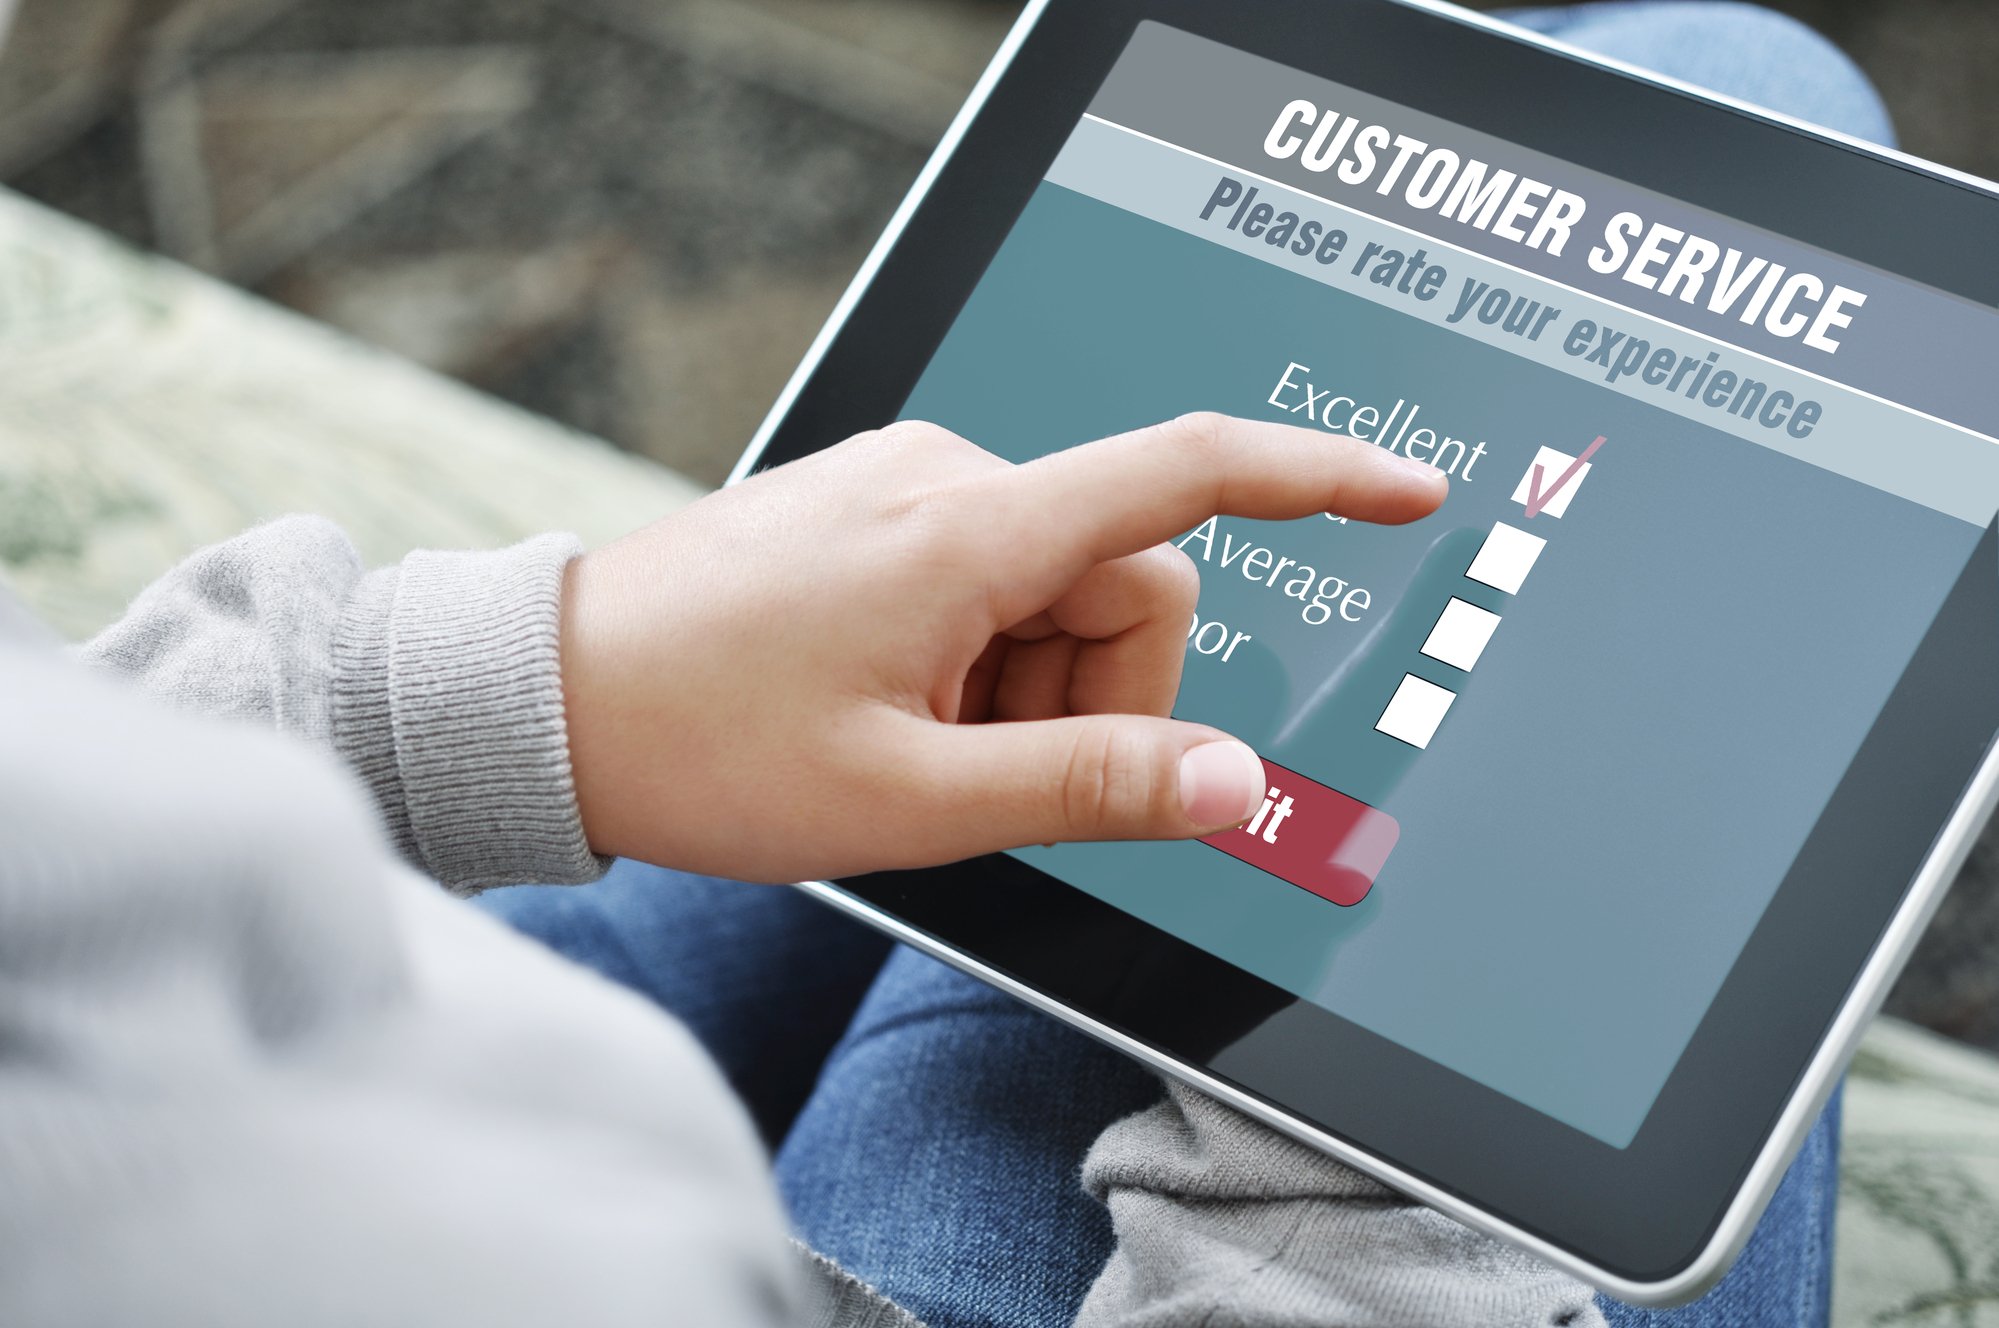 Online customer service satisfaction survey